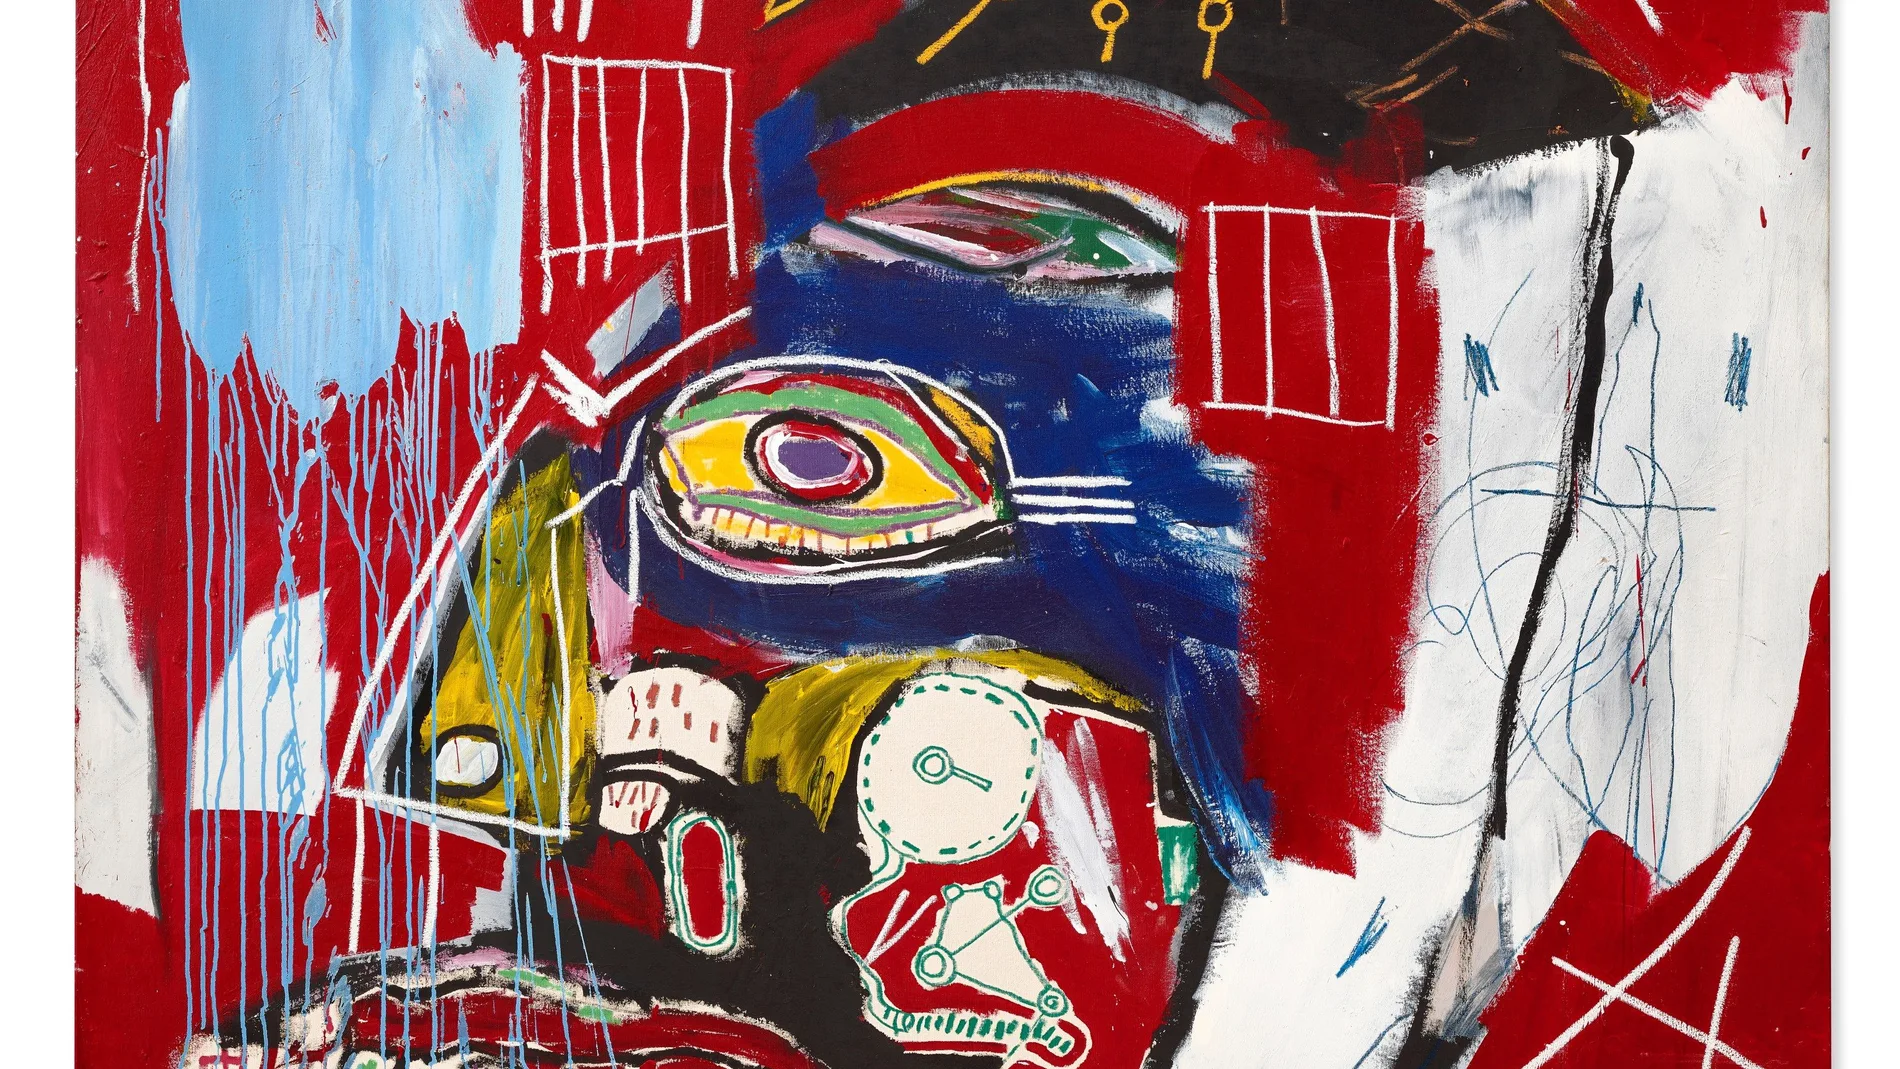 "In this case", de Basquiat